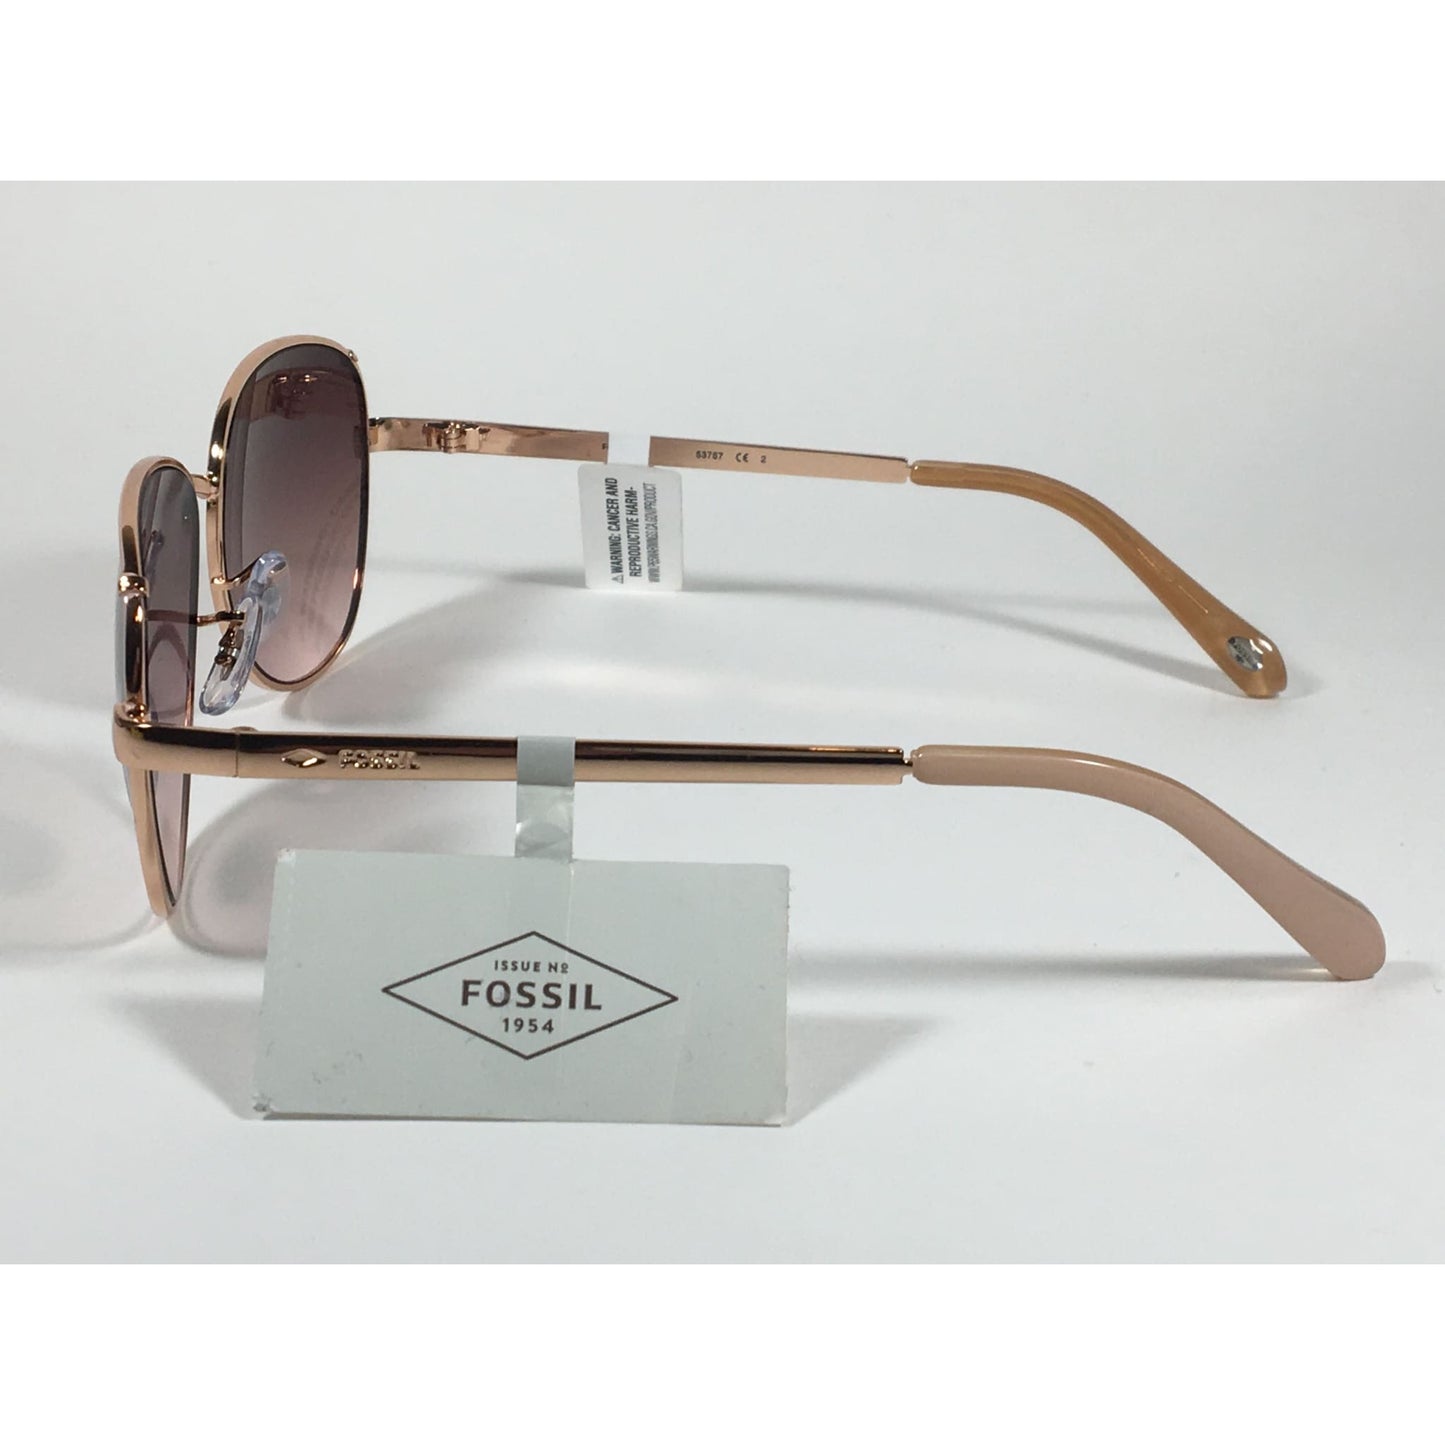 Fossil FW107 Aviator Sunglasses Rose Gold Metal Frame Brown Pink Gradient Lens - Sunglasses